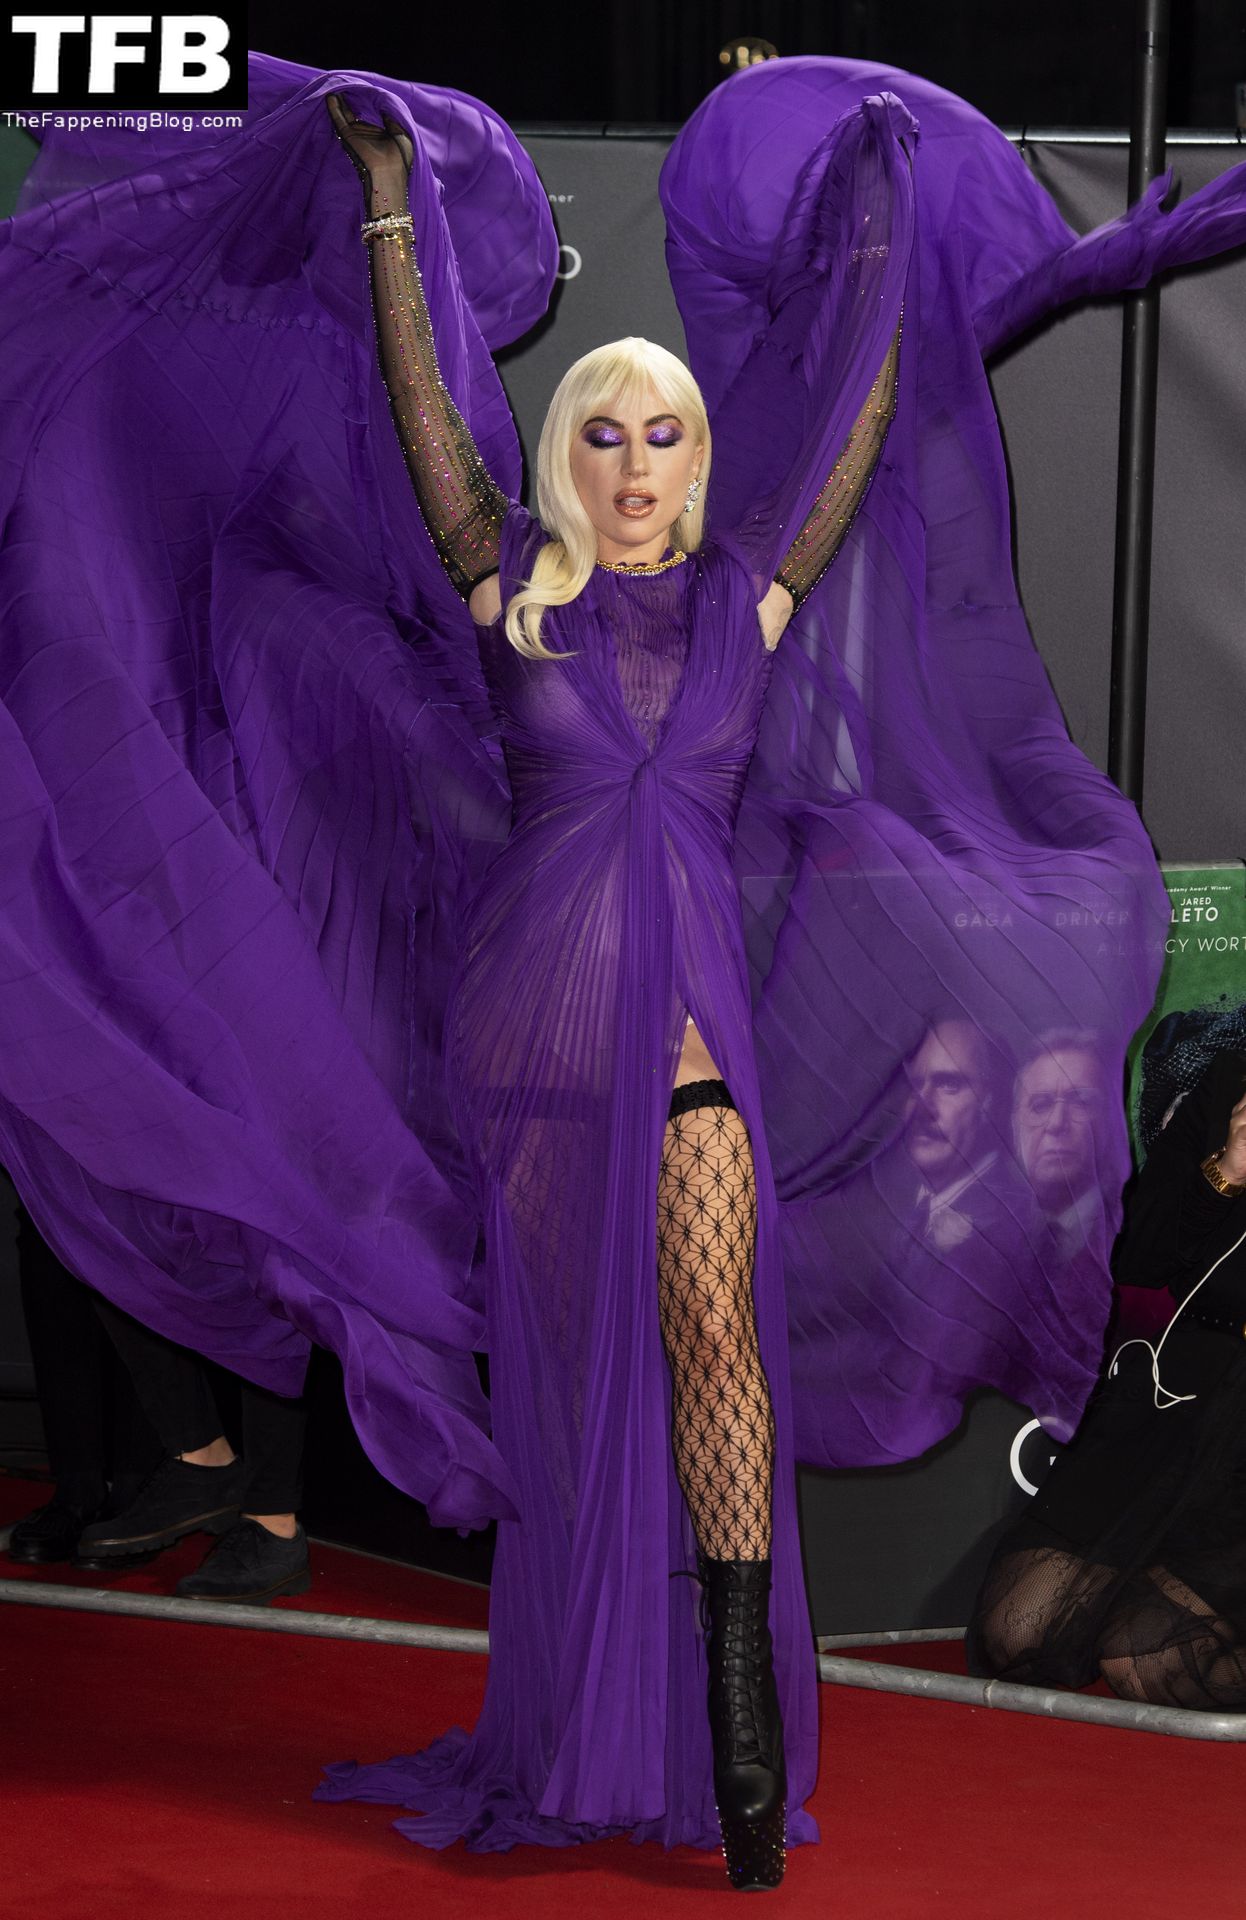 Lady-Gaga-Sexy-The-Fappening-Blog-152.jpg